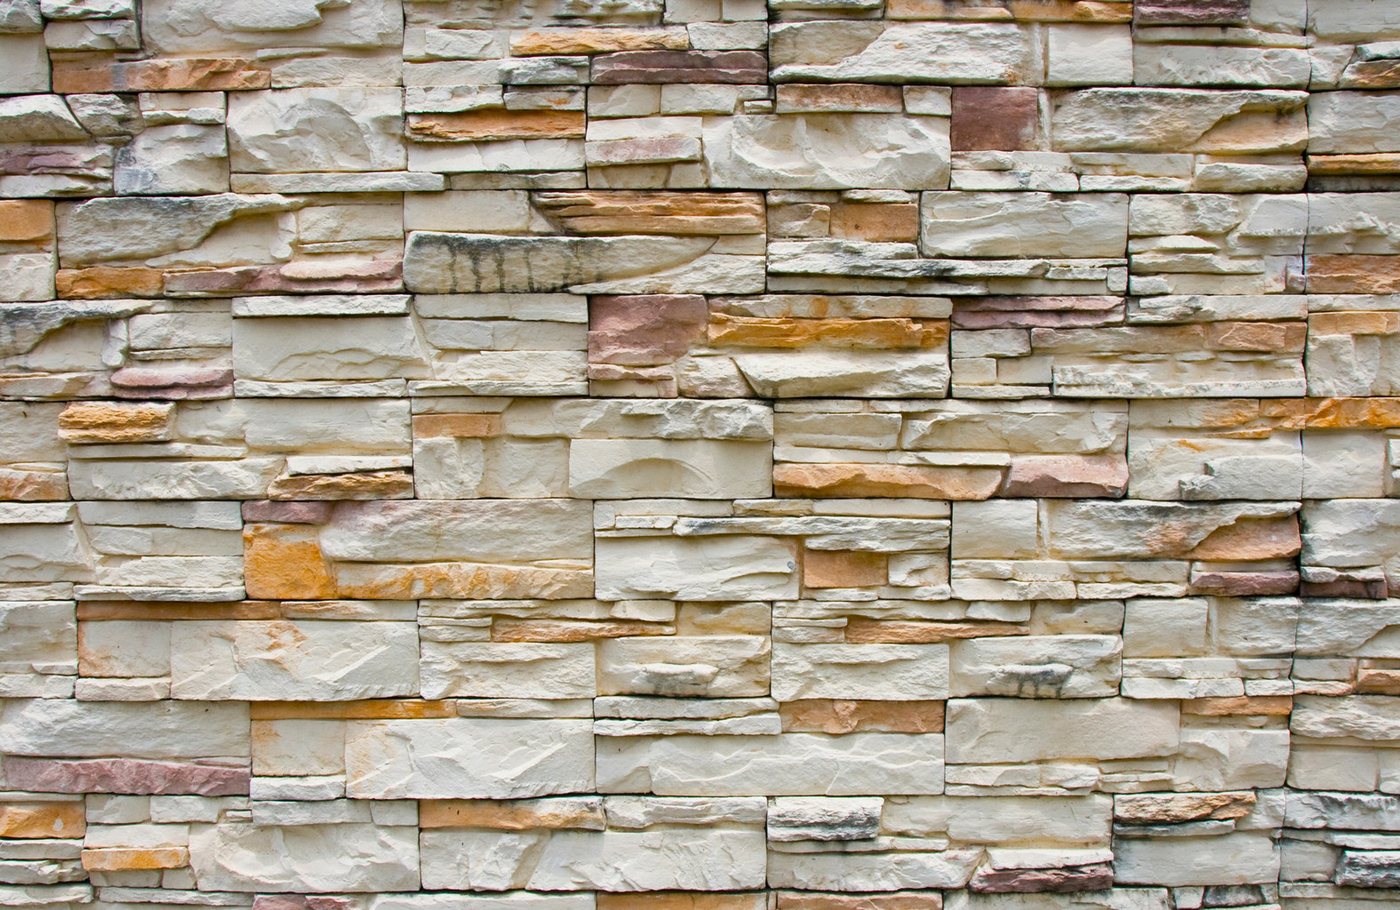 Papermoon Fototapete NEU" PREMIUM-VLIES-Tapete, leicht strukturiert, Seidenmatt, restlos trocken abziehbar, (komplett Set inkl. Tapetenkleister, 5648), Stone wall" von Papermoon